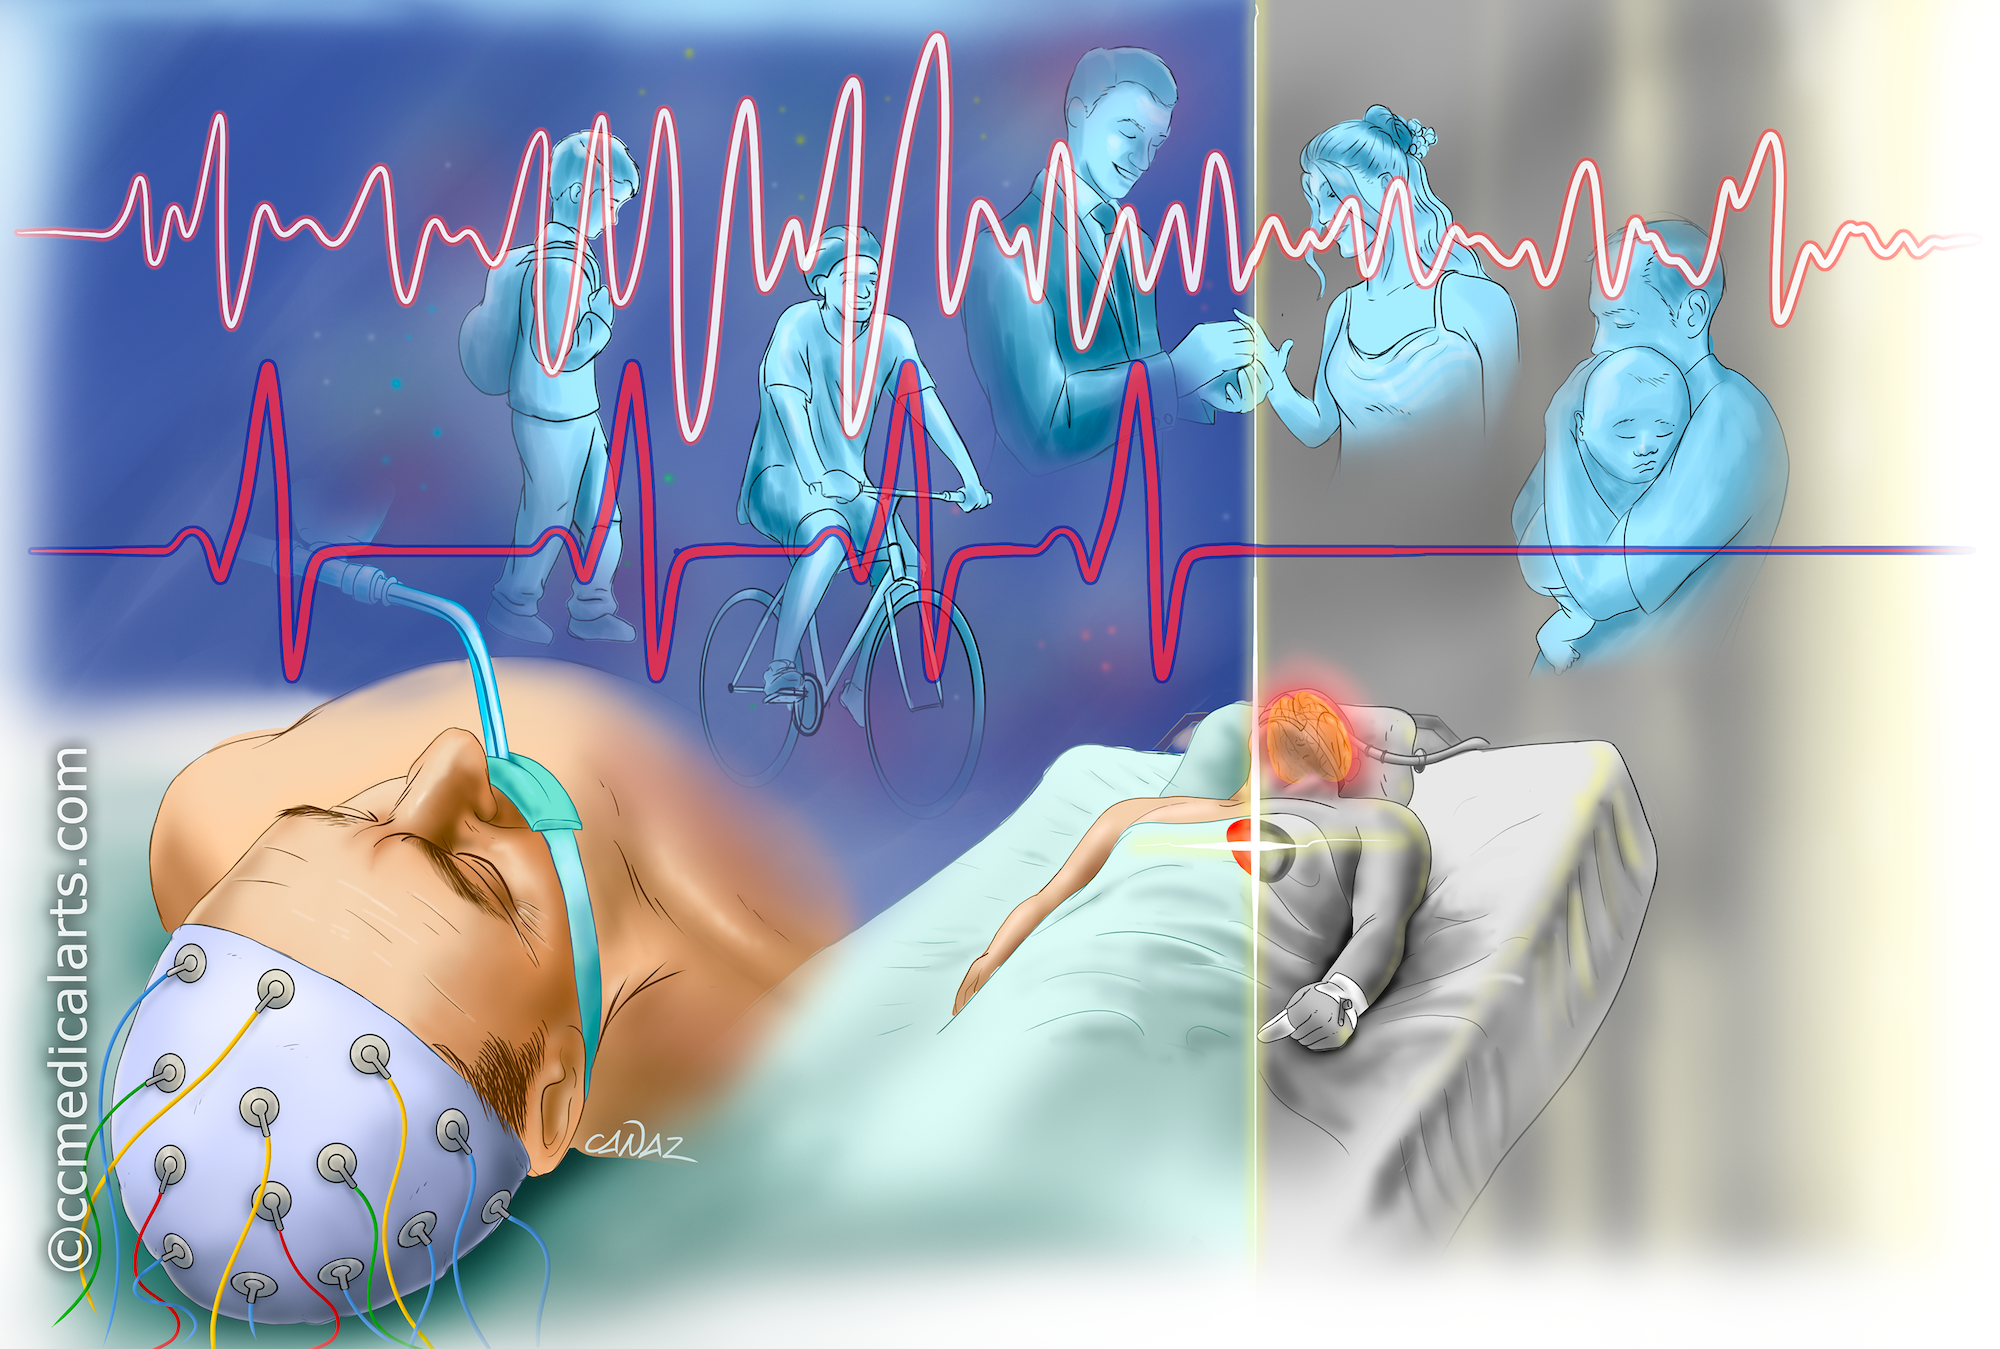 Heart beat brain scan dreaming illustration